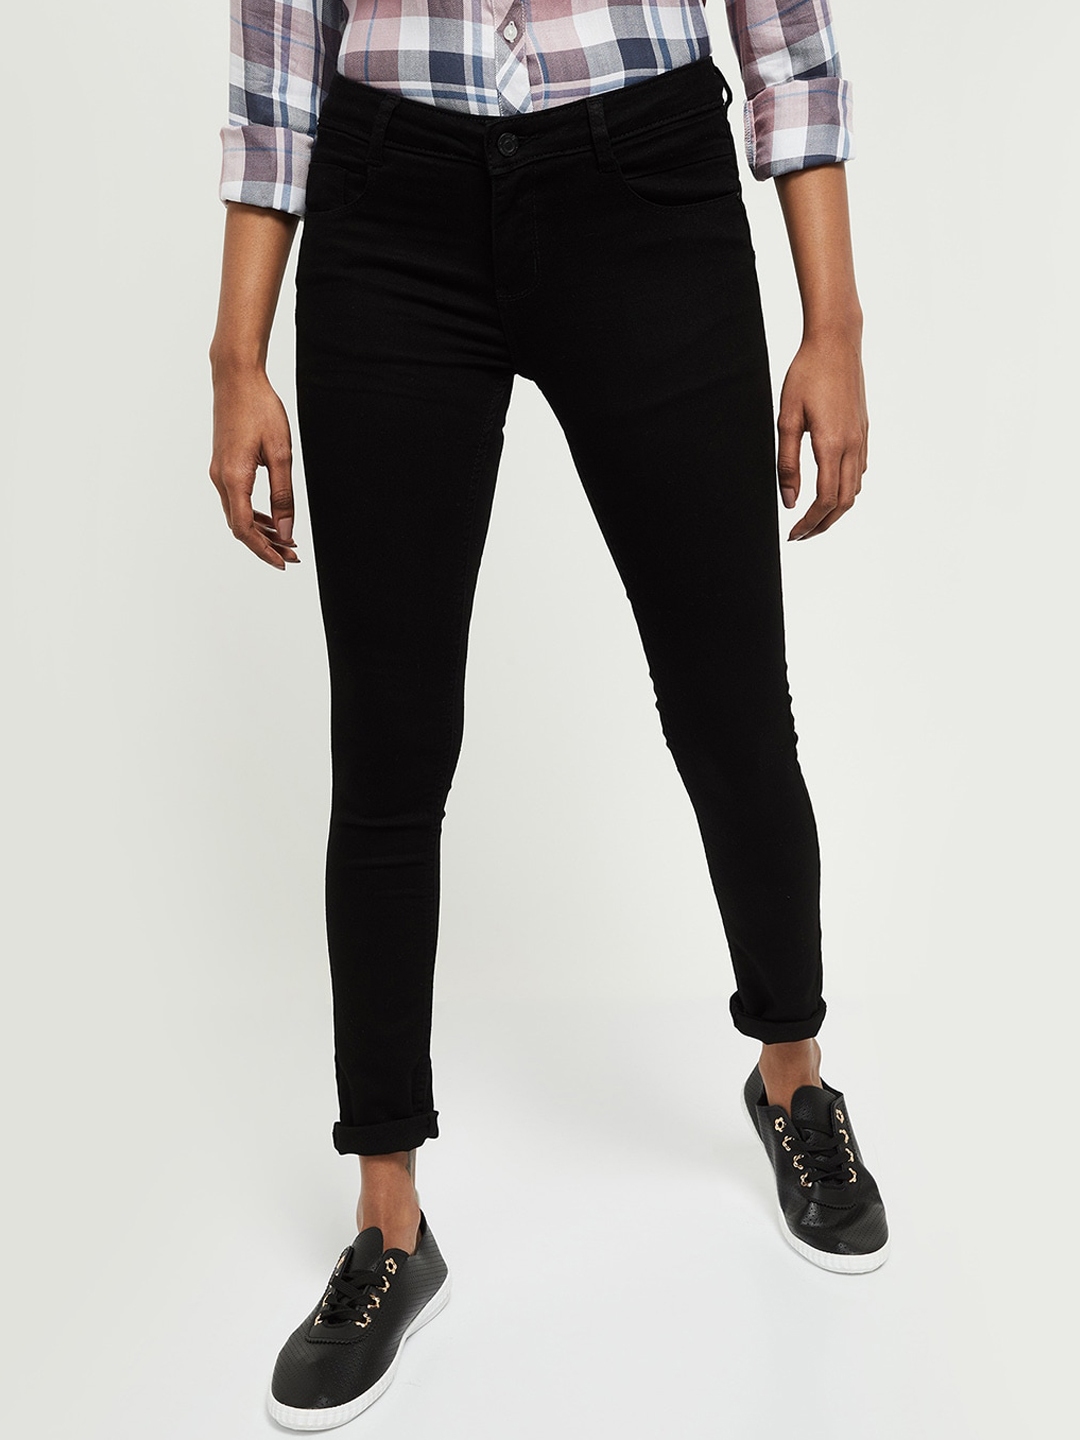 Buy Max Women Black Slim Fit Jeans - Jeans for Women 15543722 | Myntra